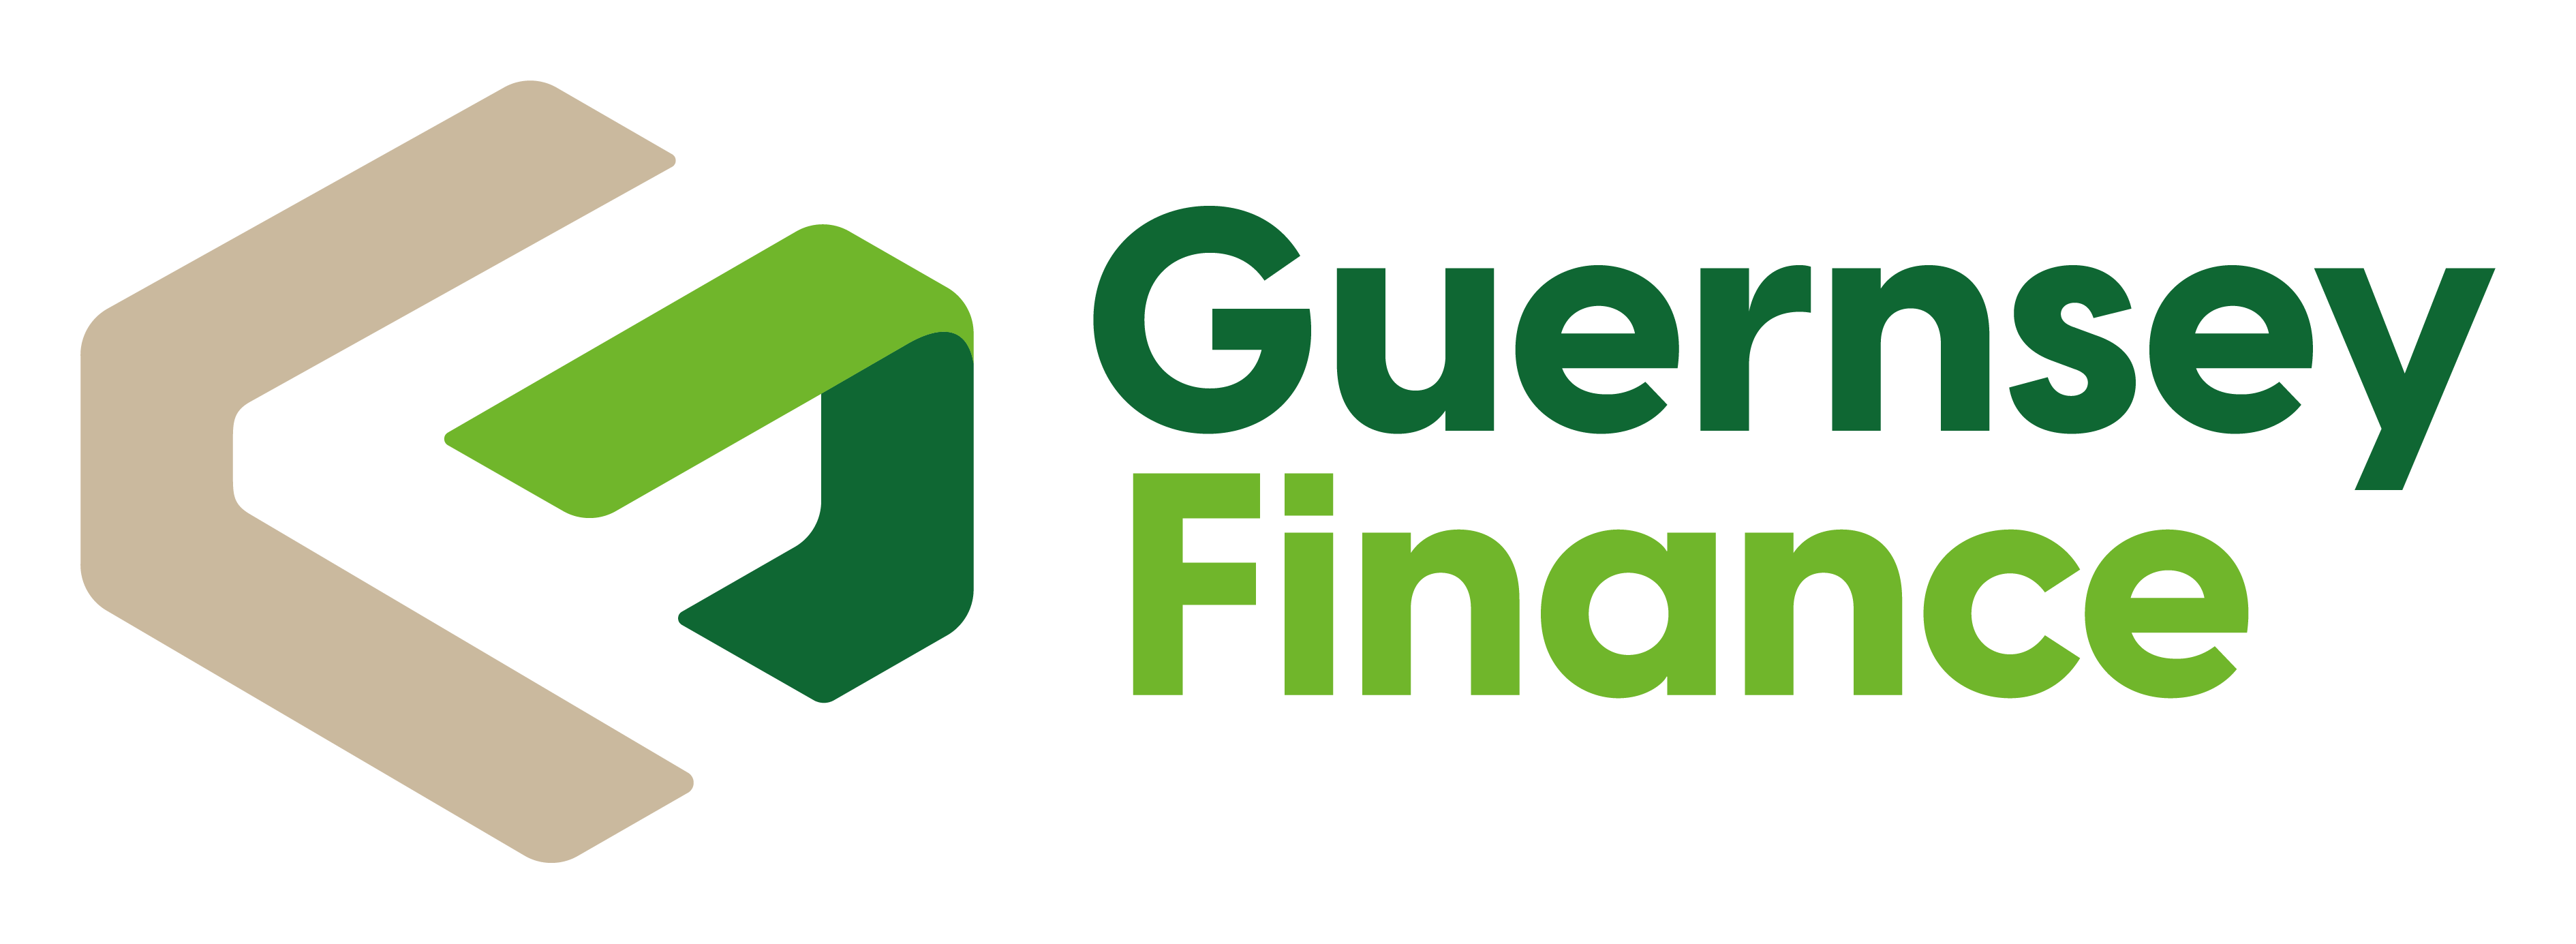 Guernsey Finance Logo